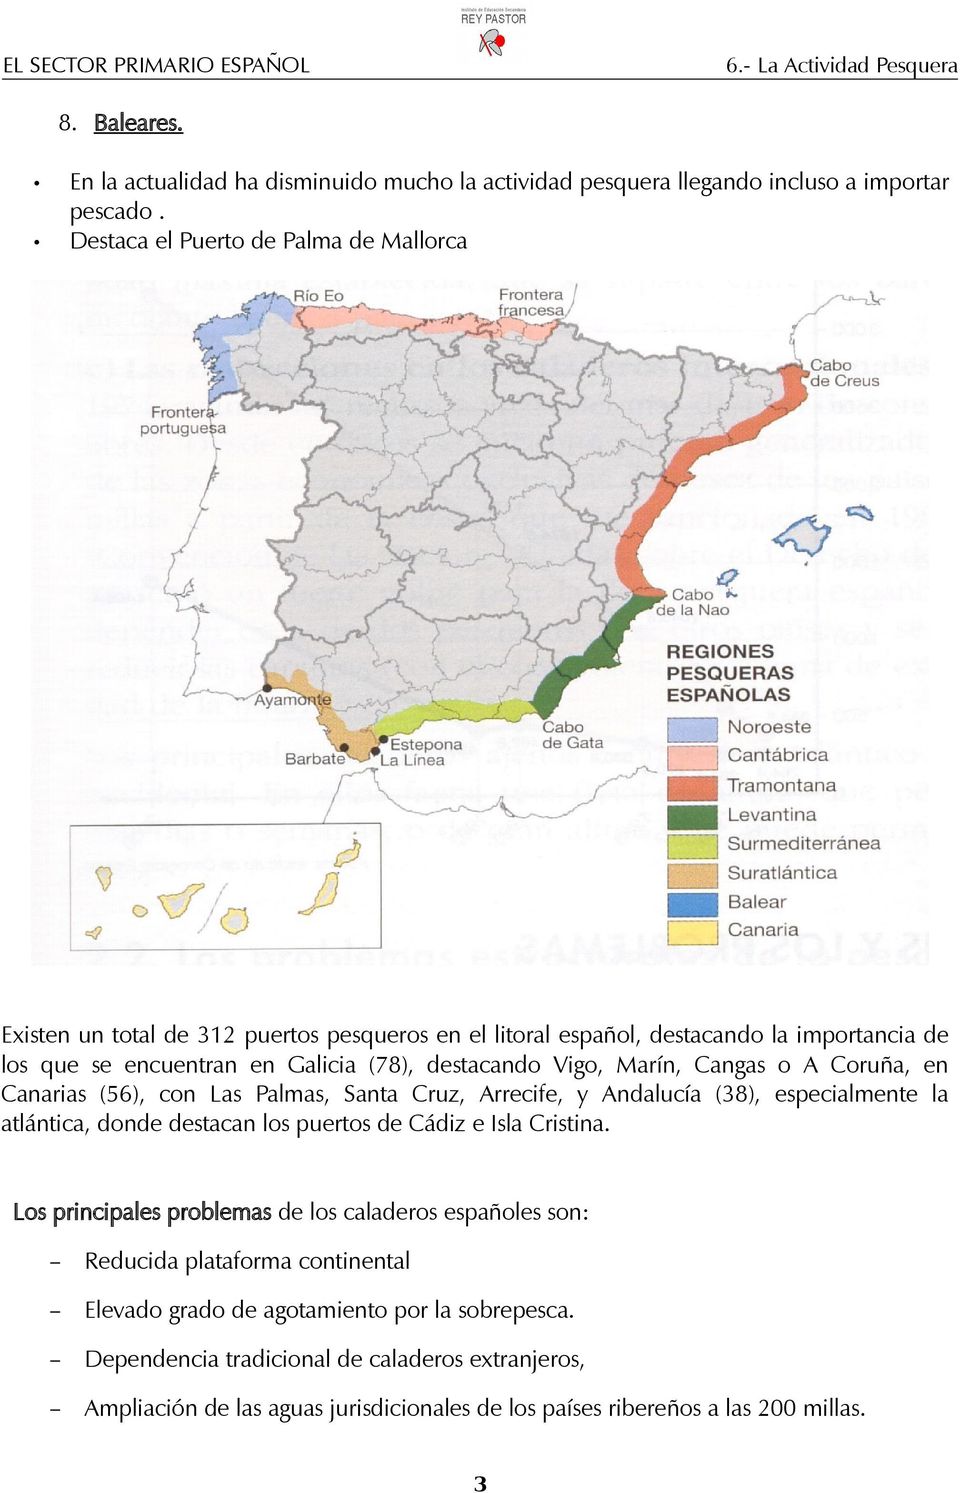 Vigo, Marín, Cangas o A Coruña, en Canarias (56), con Las Palmas, Santa Cruz, Arrecife, y Andalucía (38), especialmente la atlántica, donde destacan los puertos de Cádiz e Isla Cristina.